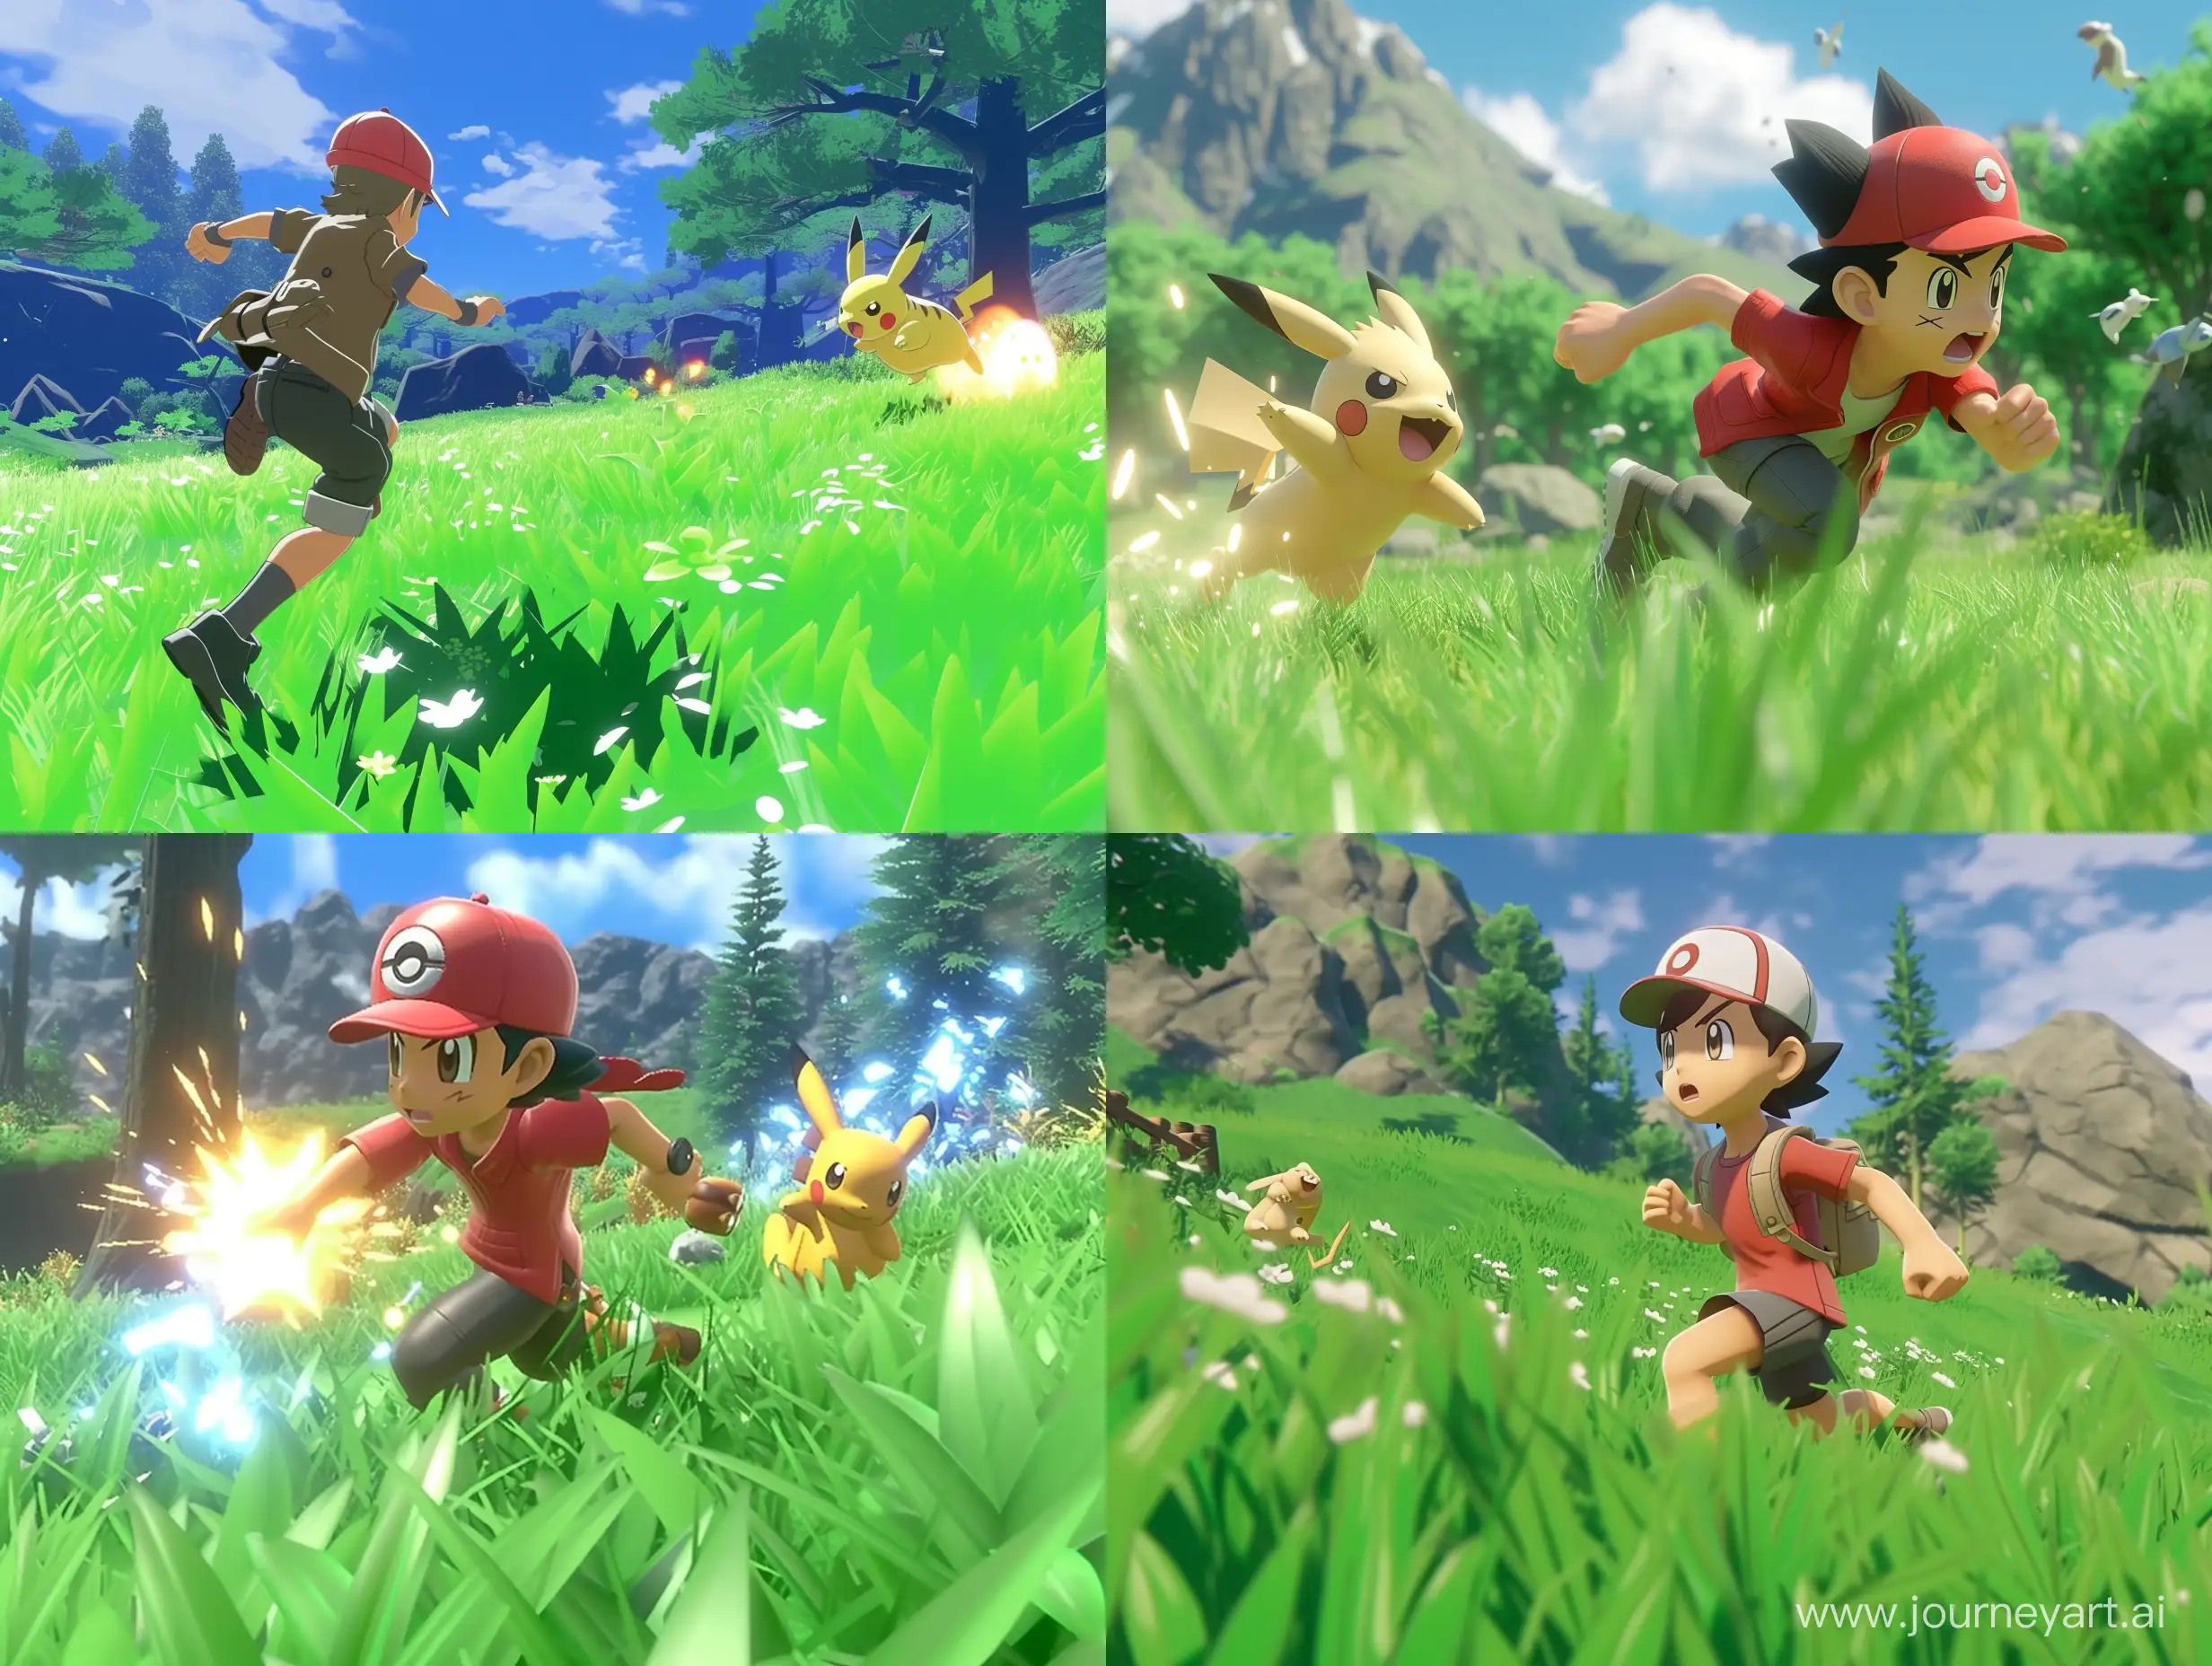 Dynamic-Pokemon-Nintendo-Switch-Game-Screenshot-with-Character-Running-and-Pokemon-Battles